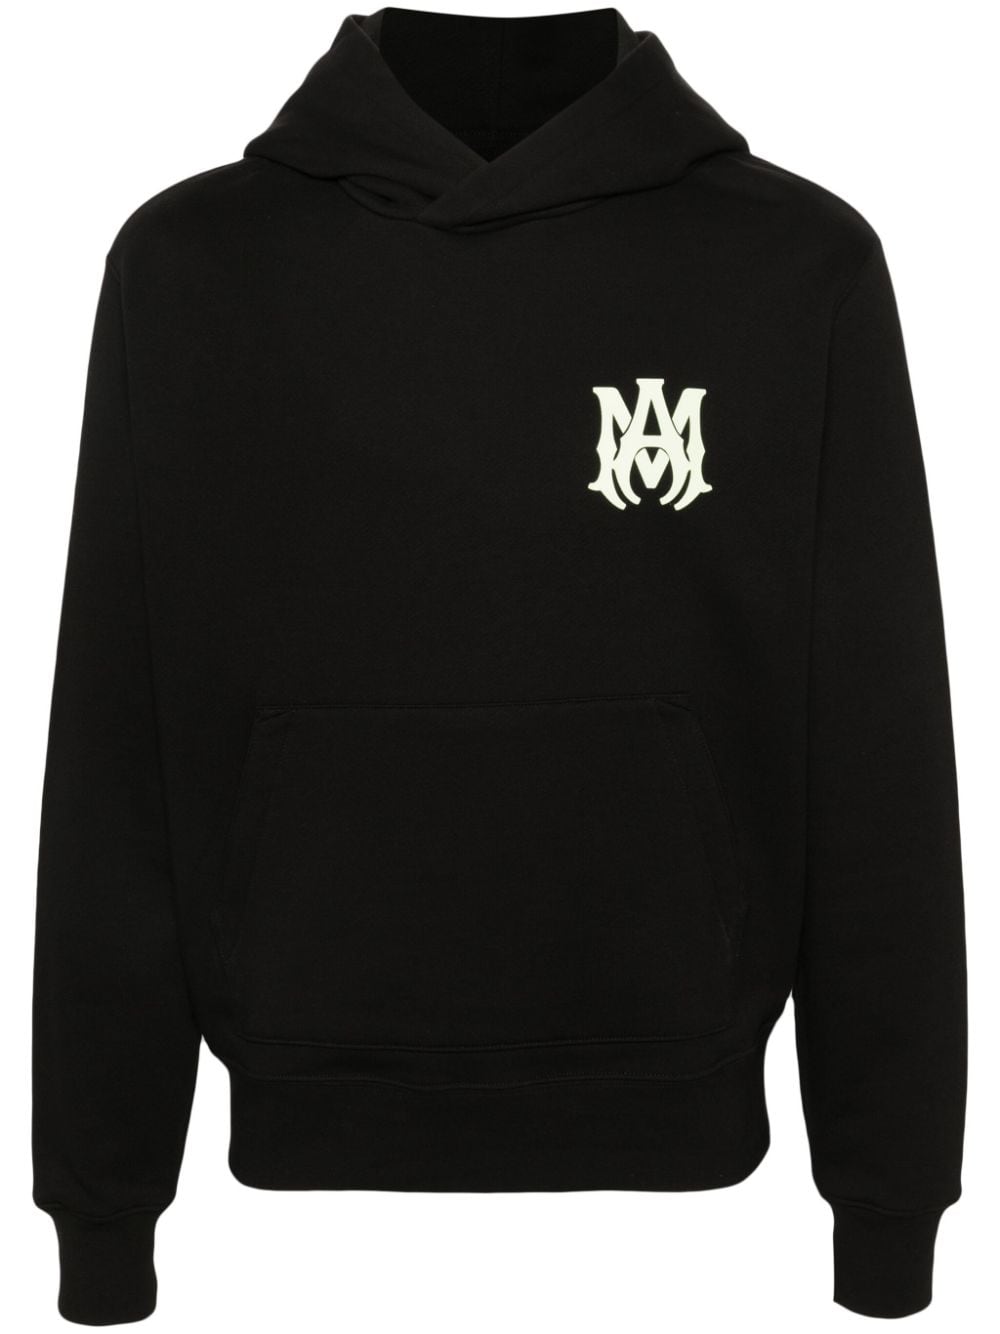 Raised monogram hoodie